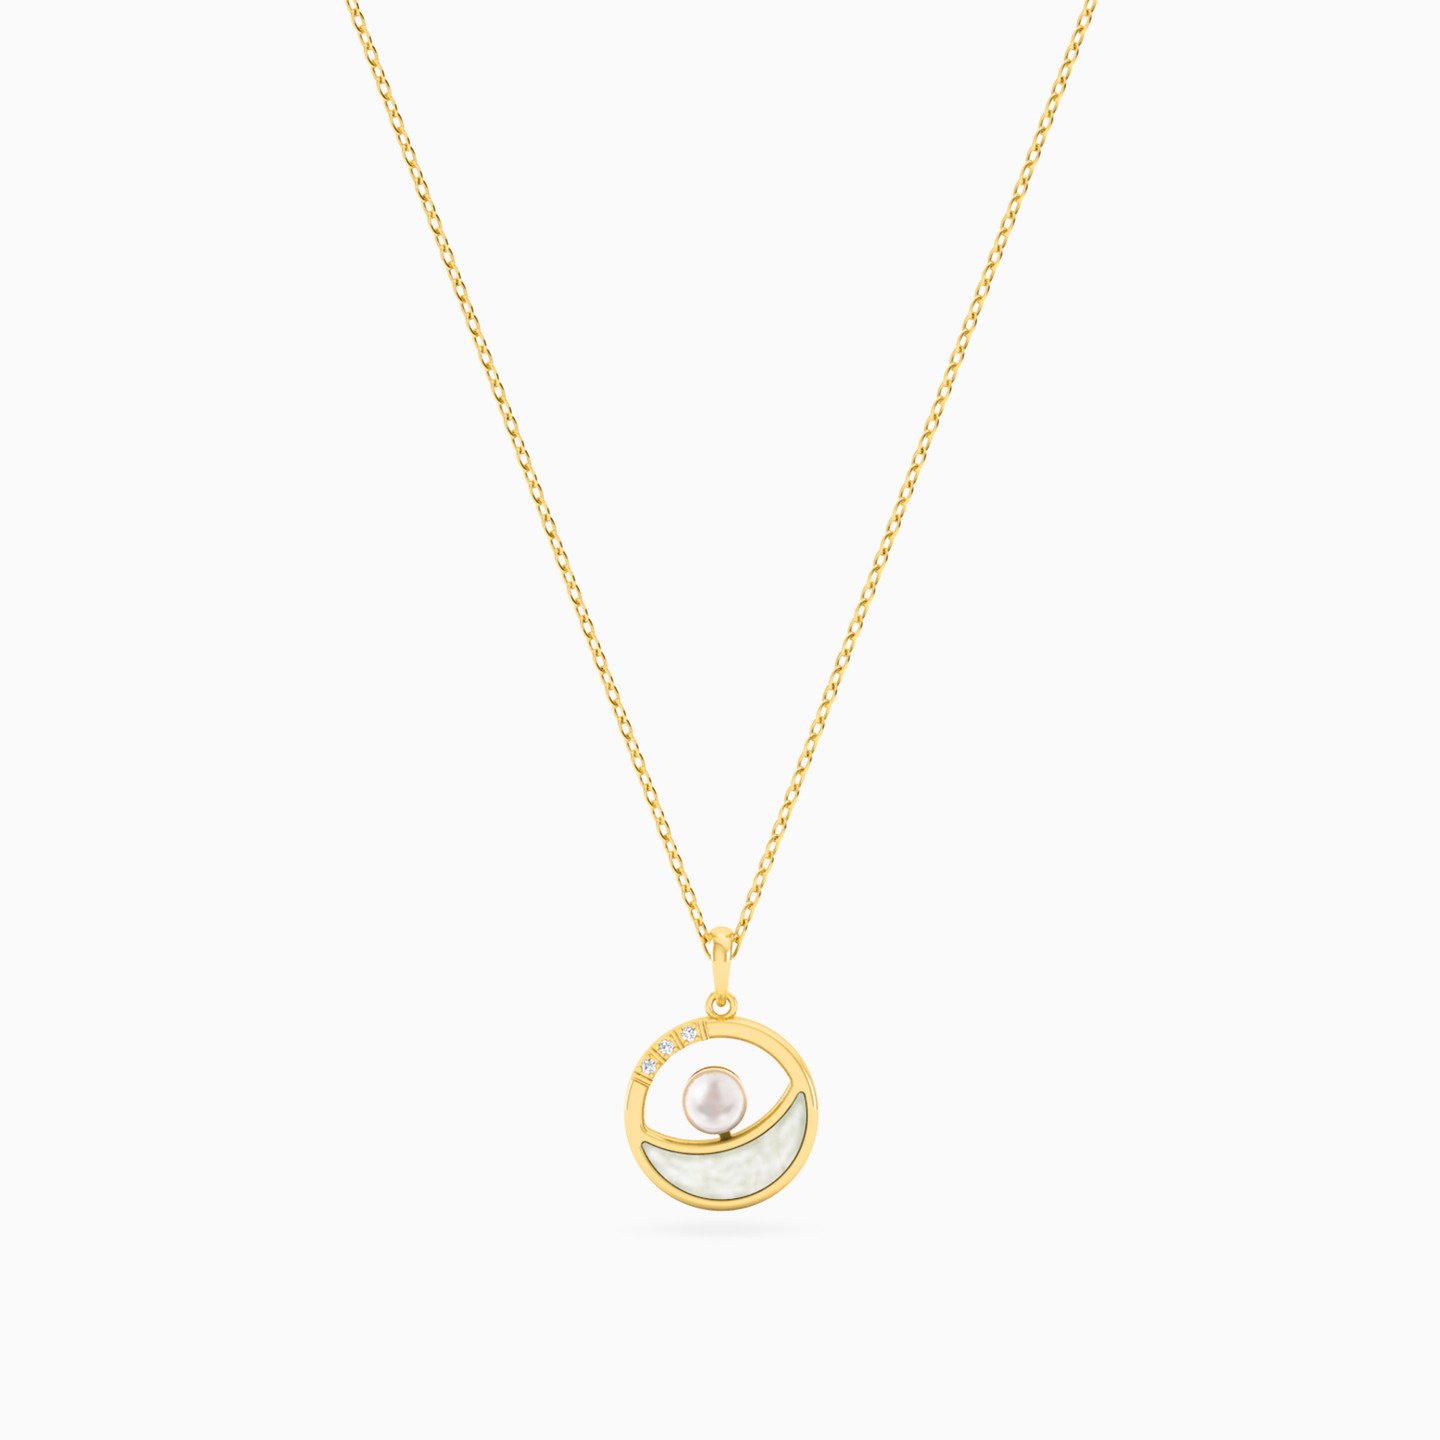 18K Gold Diamond & Pearls Pendant Necklace - 3